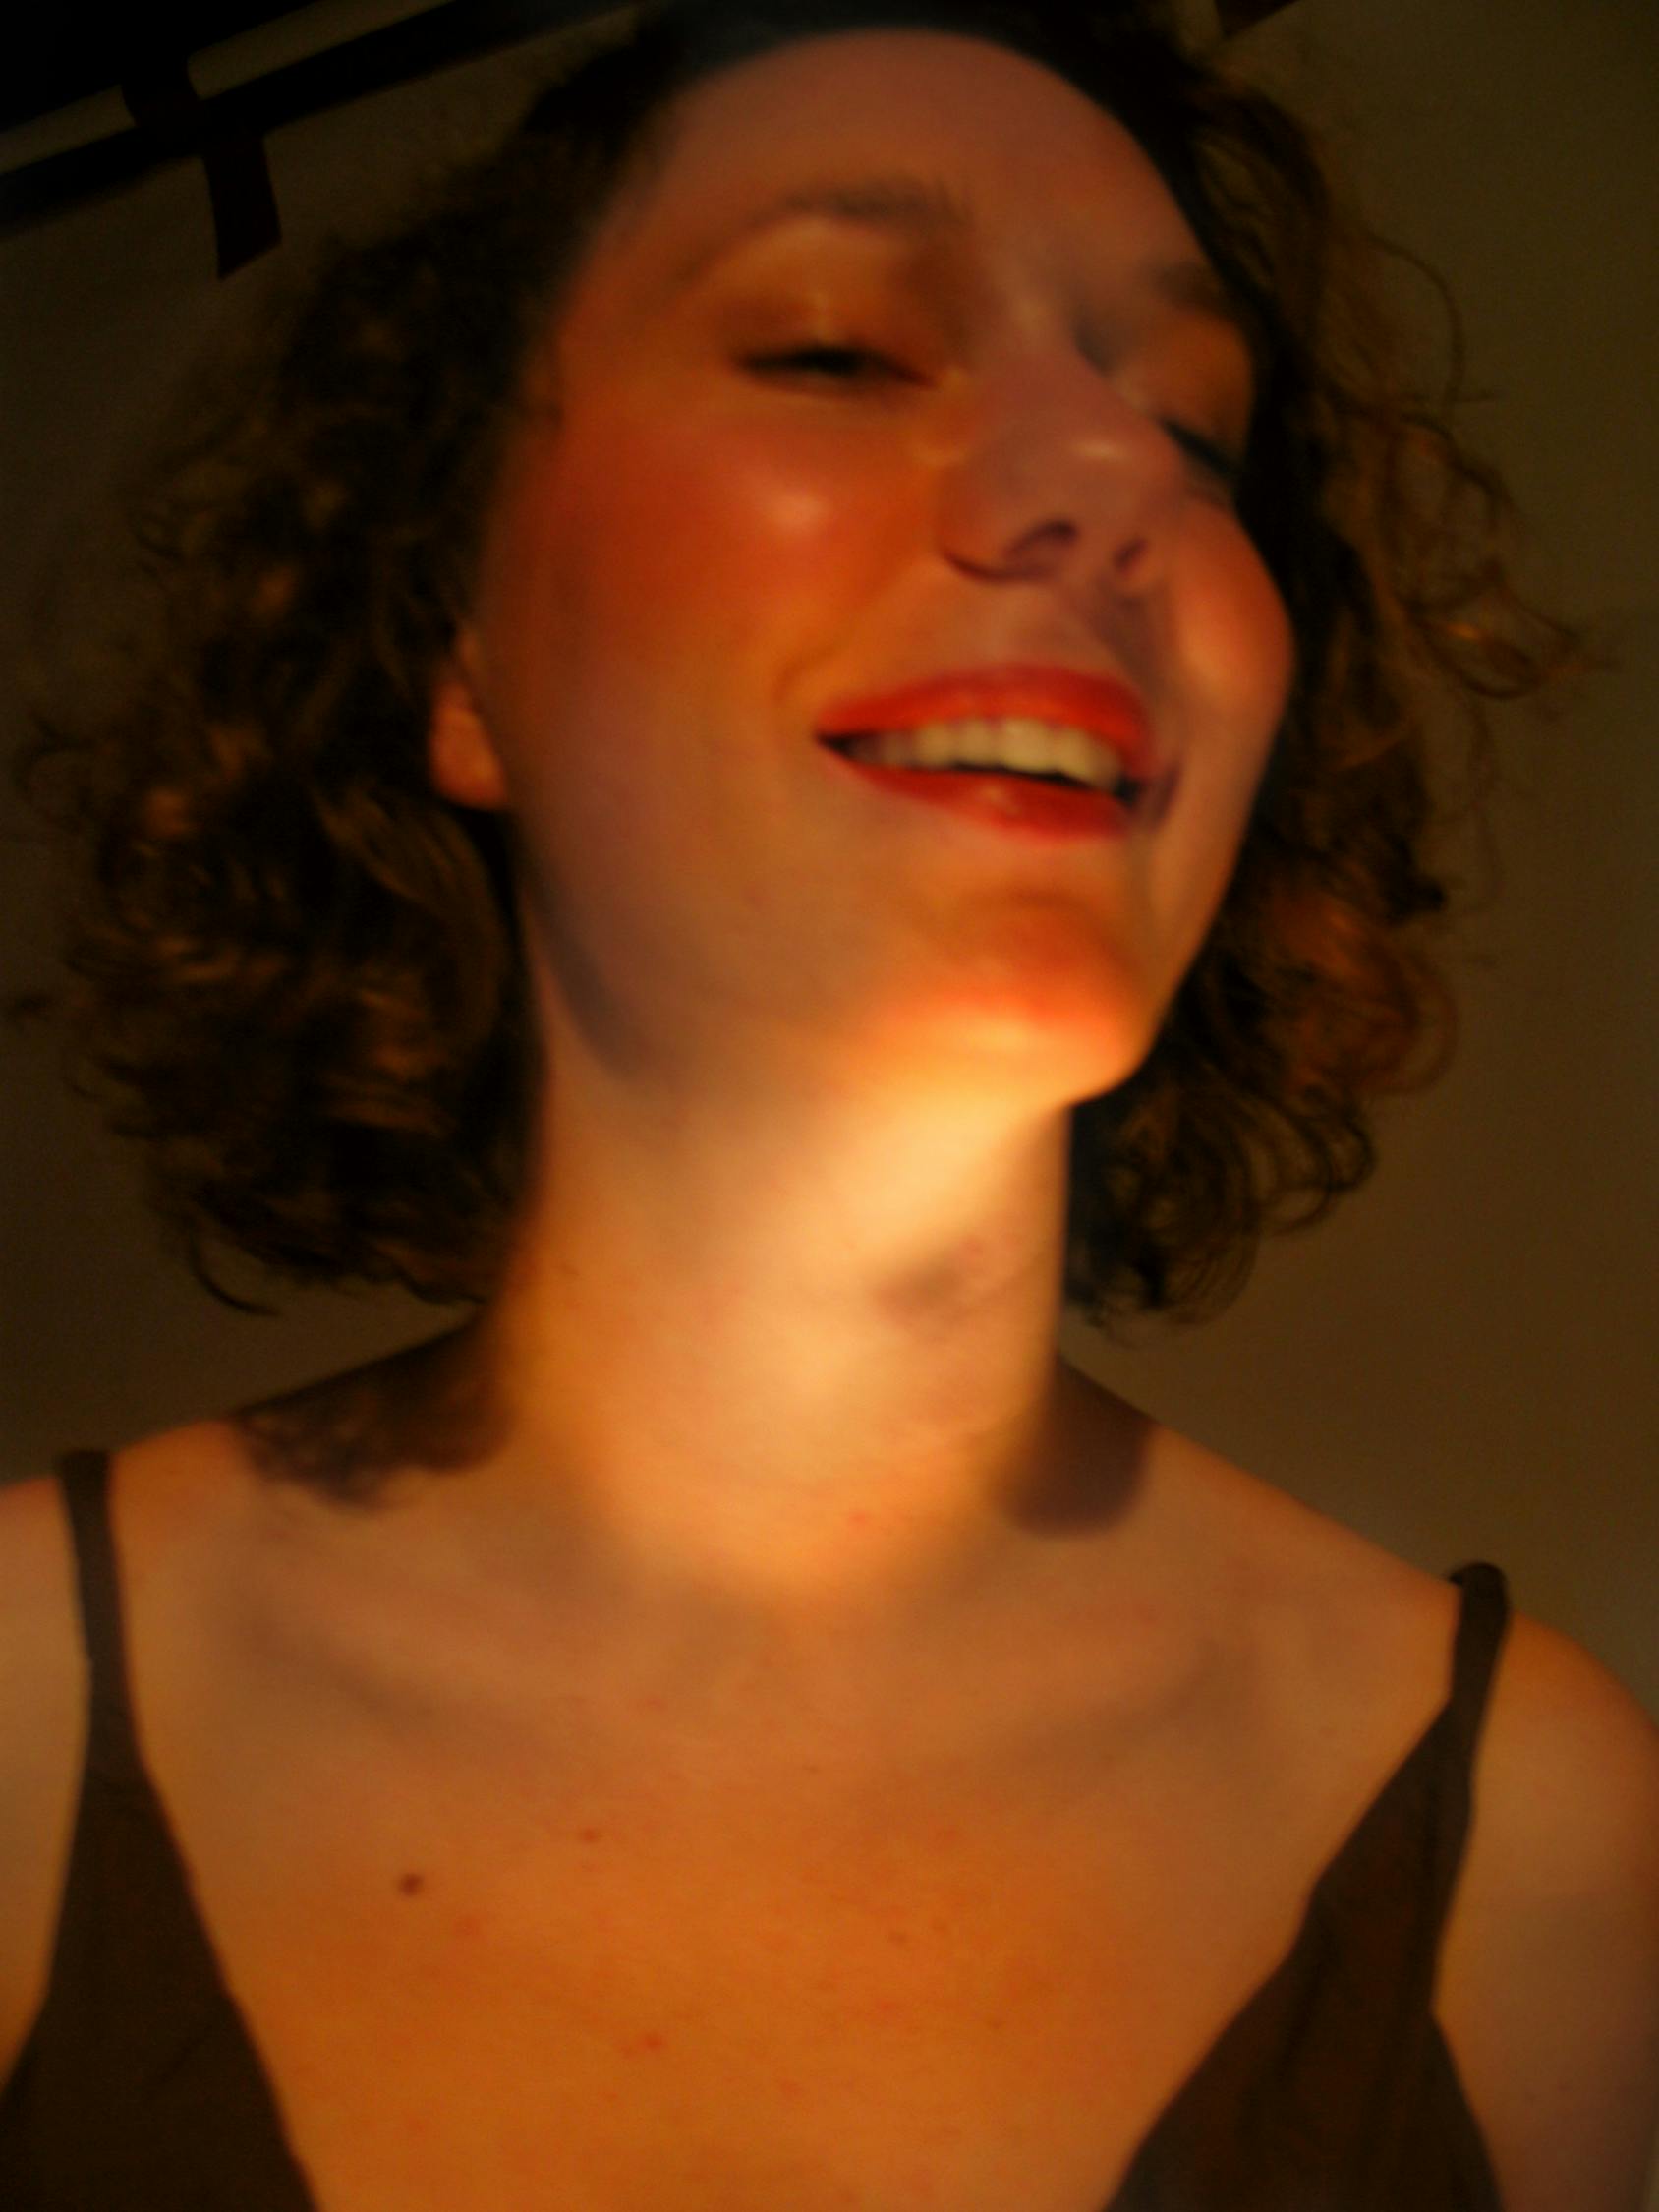 Free stock photo of smiling woman, woman blushing, woman close-up